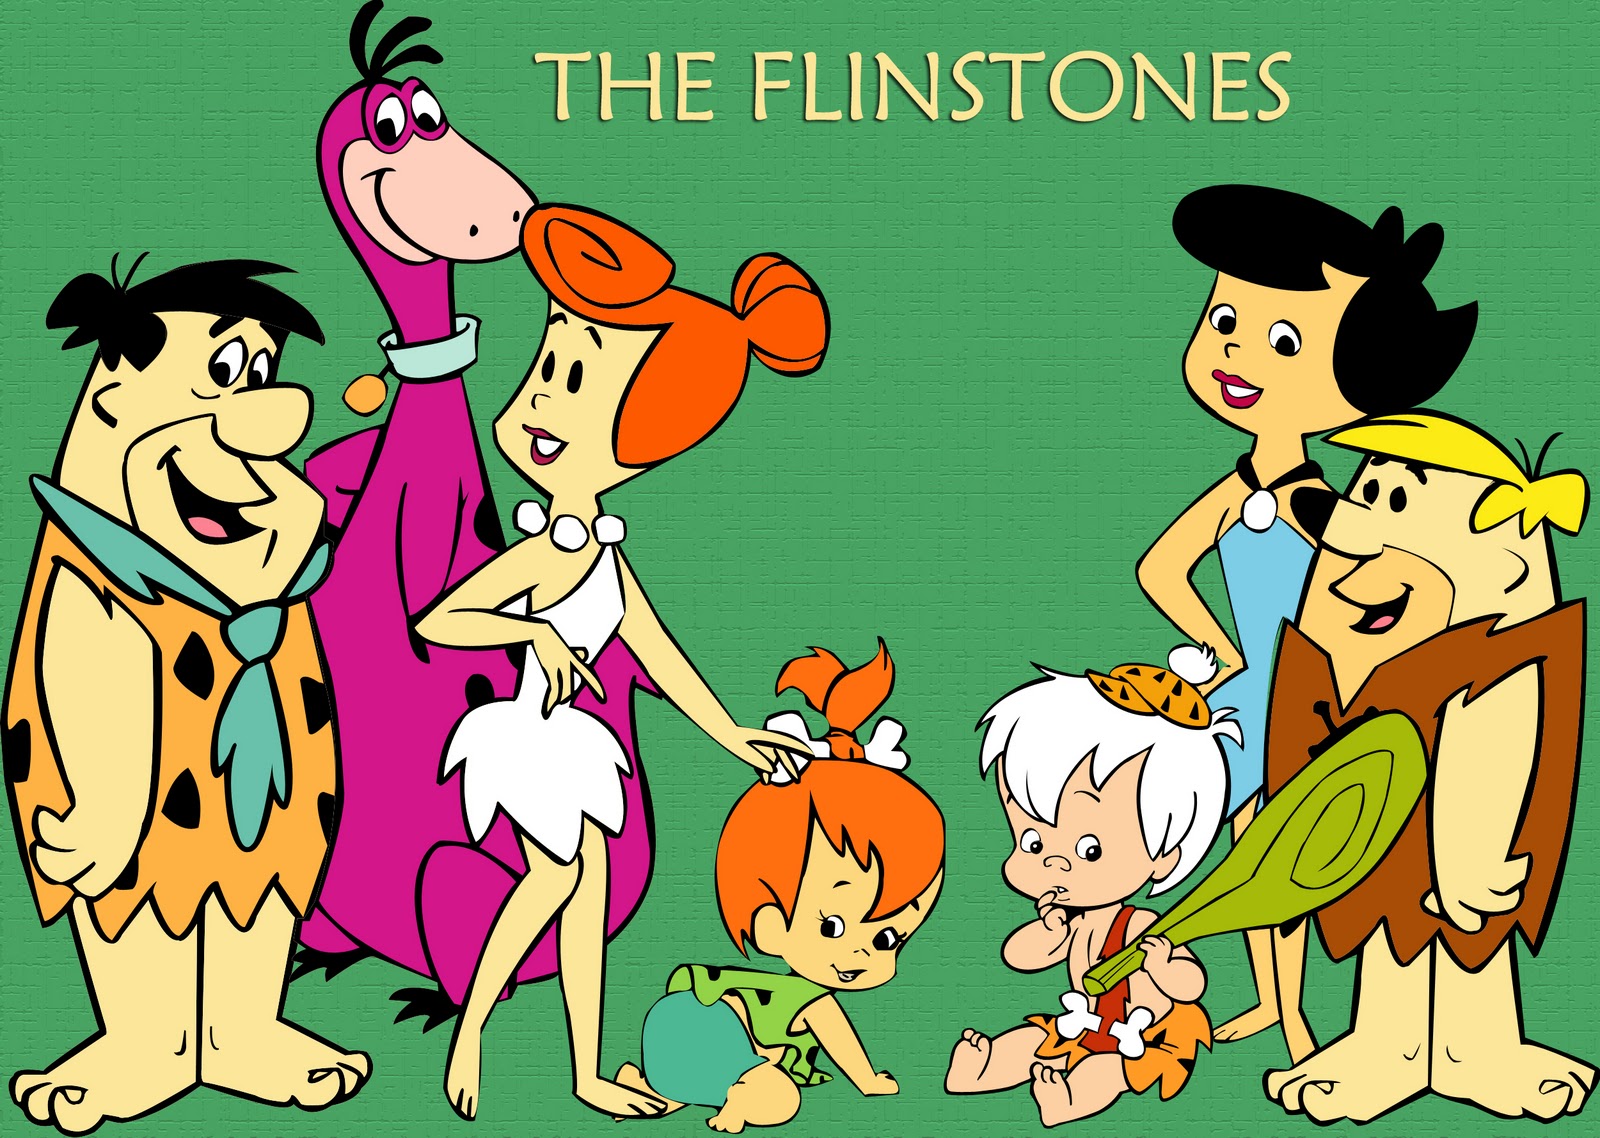 Can't do better than the Flintstones! 